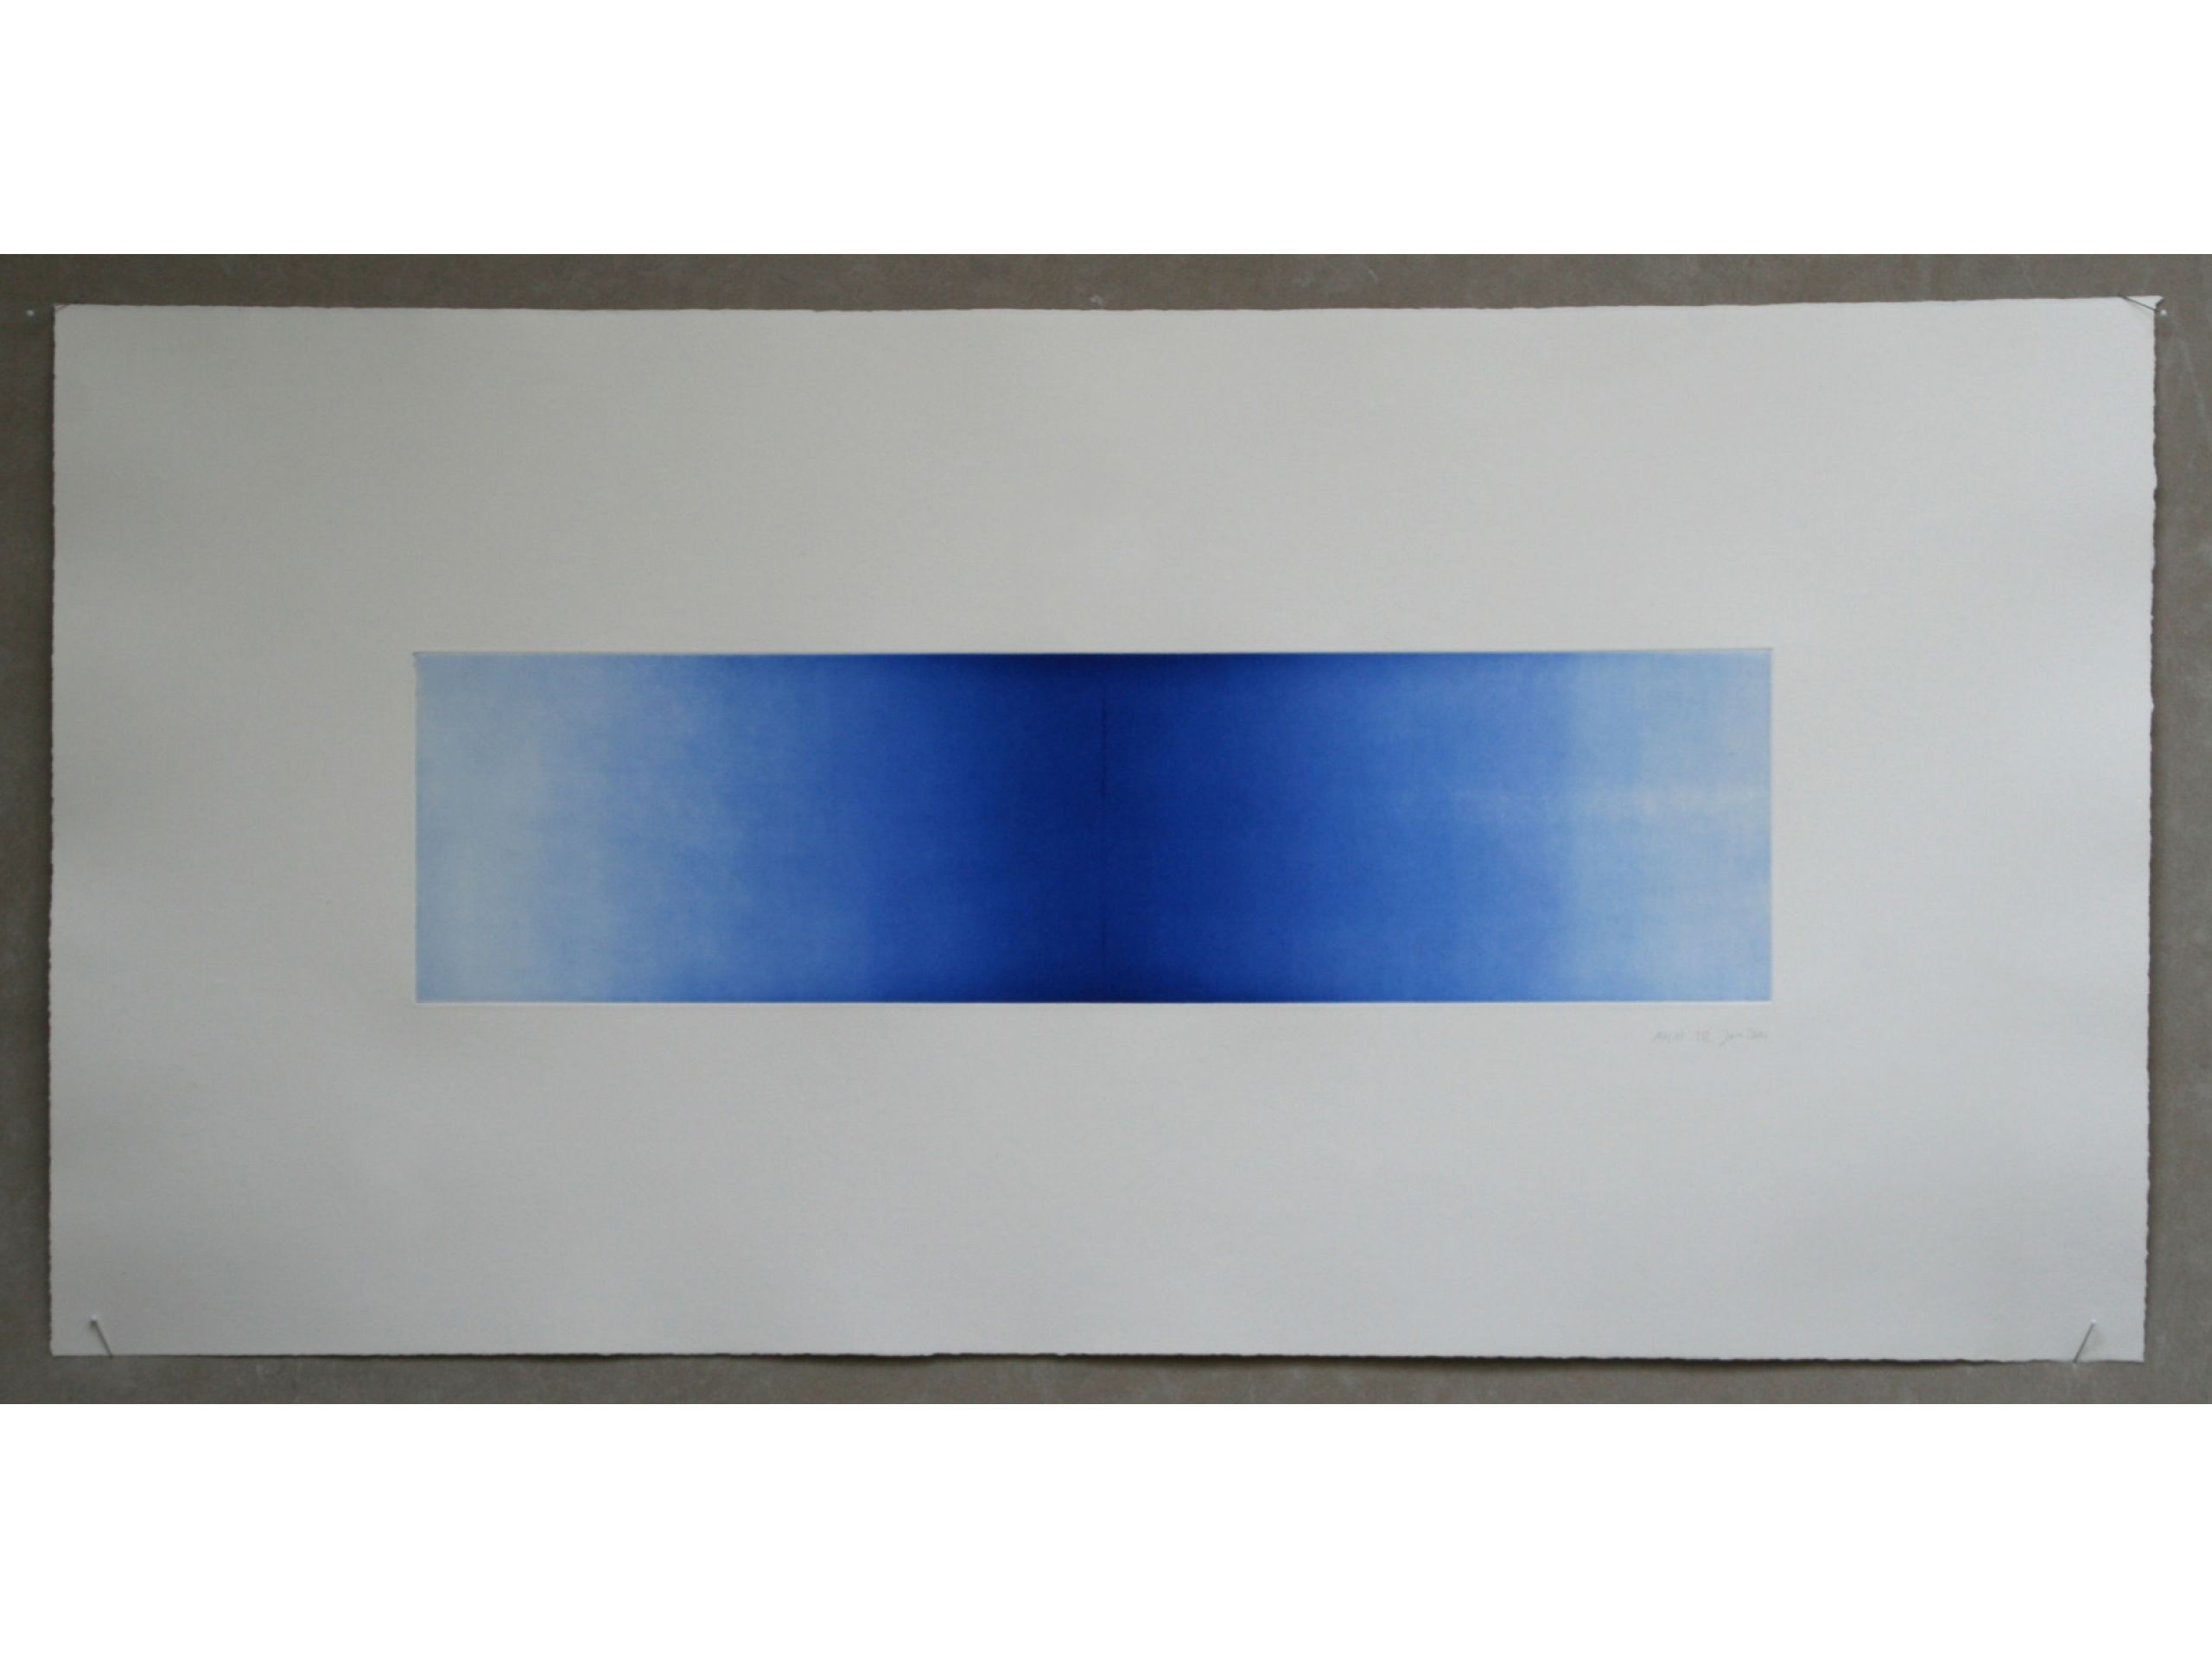 Sr. Pietra Löbl, 'O.T.', 2000, Radierung / Aquatinta, 45 x 90 cm, 80 € 